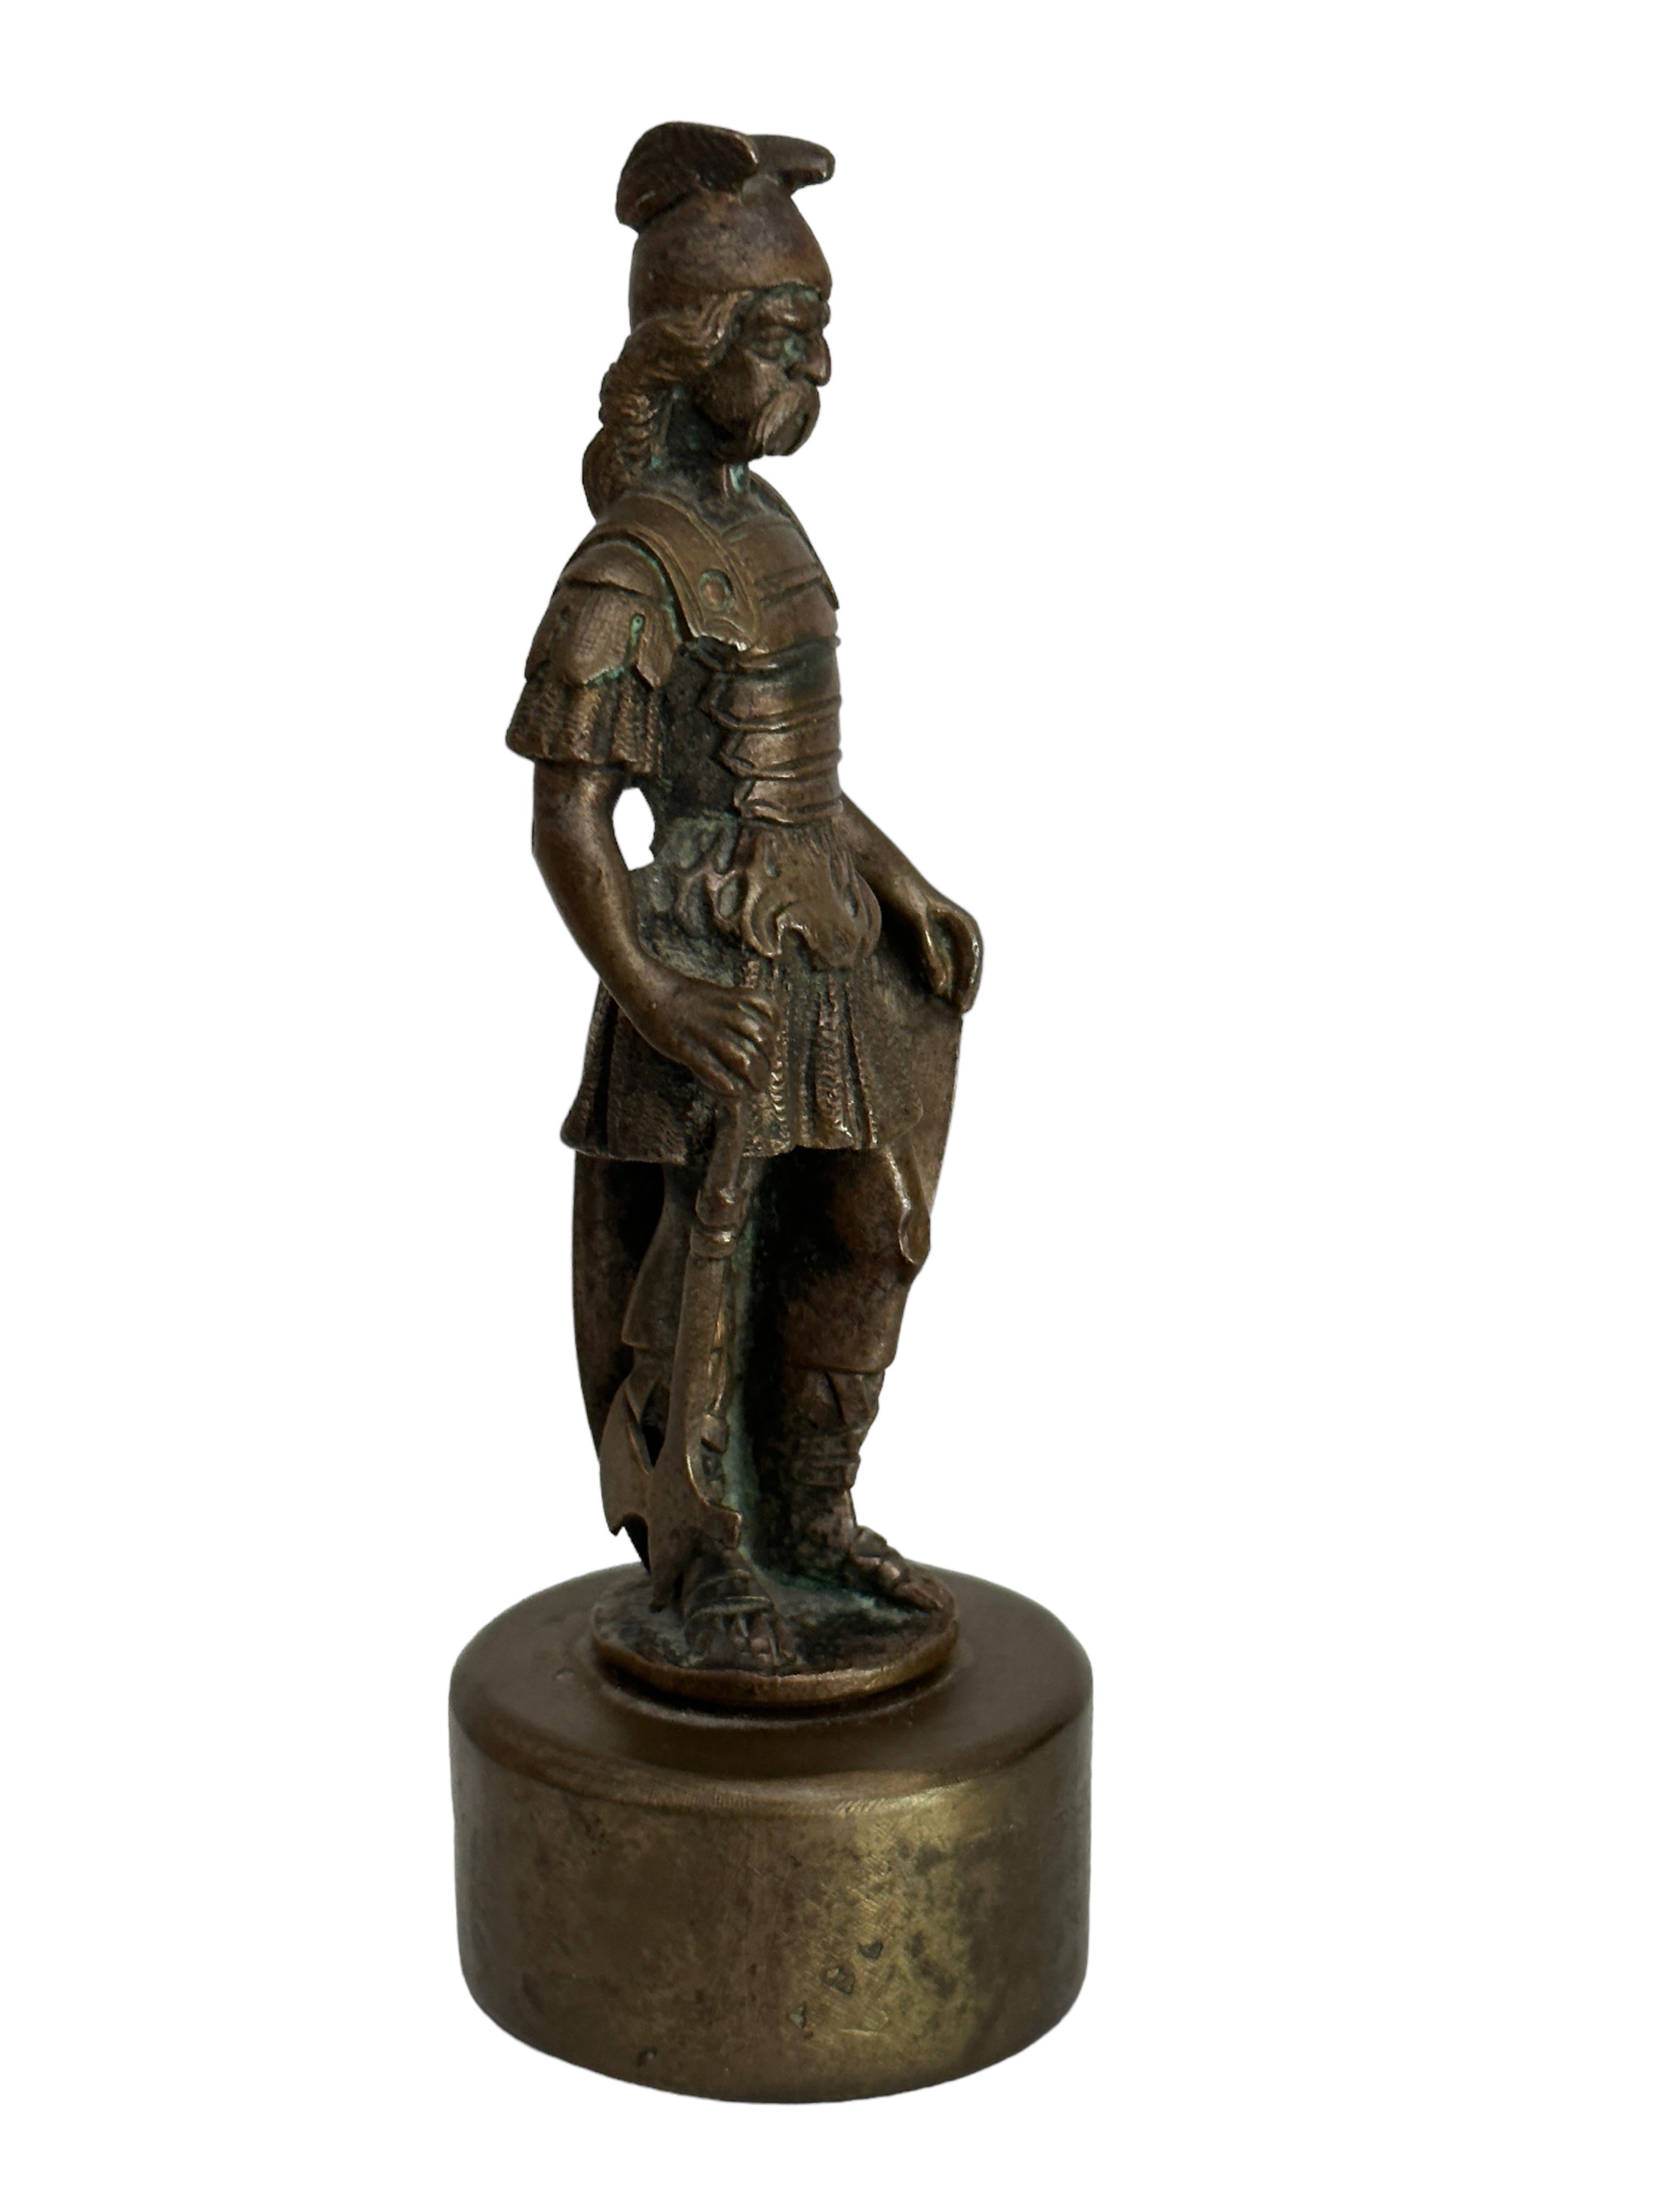 Viking Soldier Decorative Bronze Statue Sculpture, Vienna Austria 1950s For Sale 1